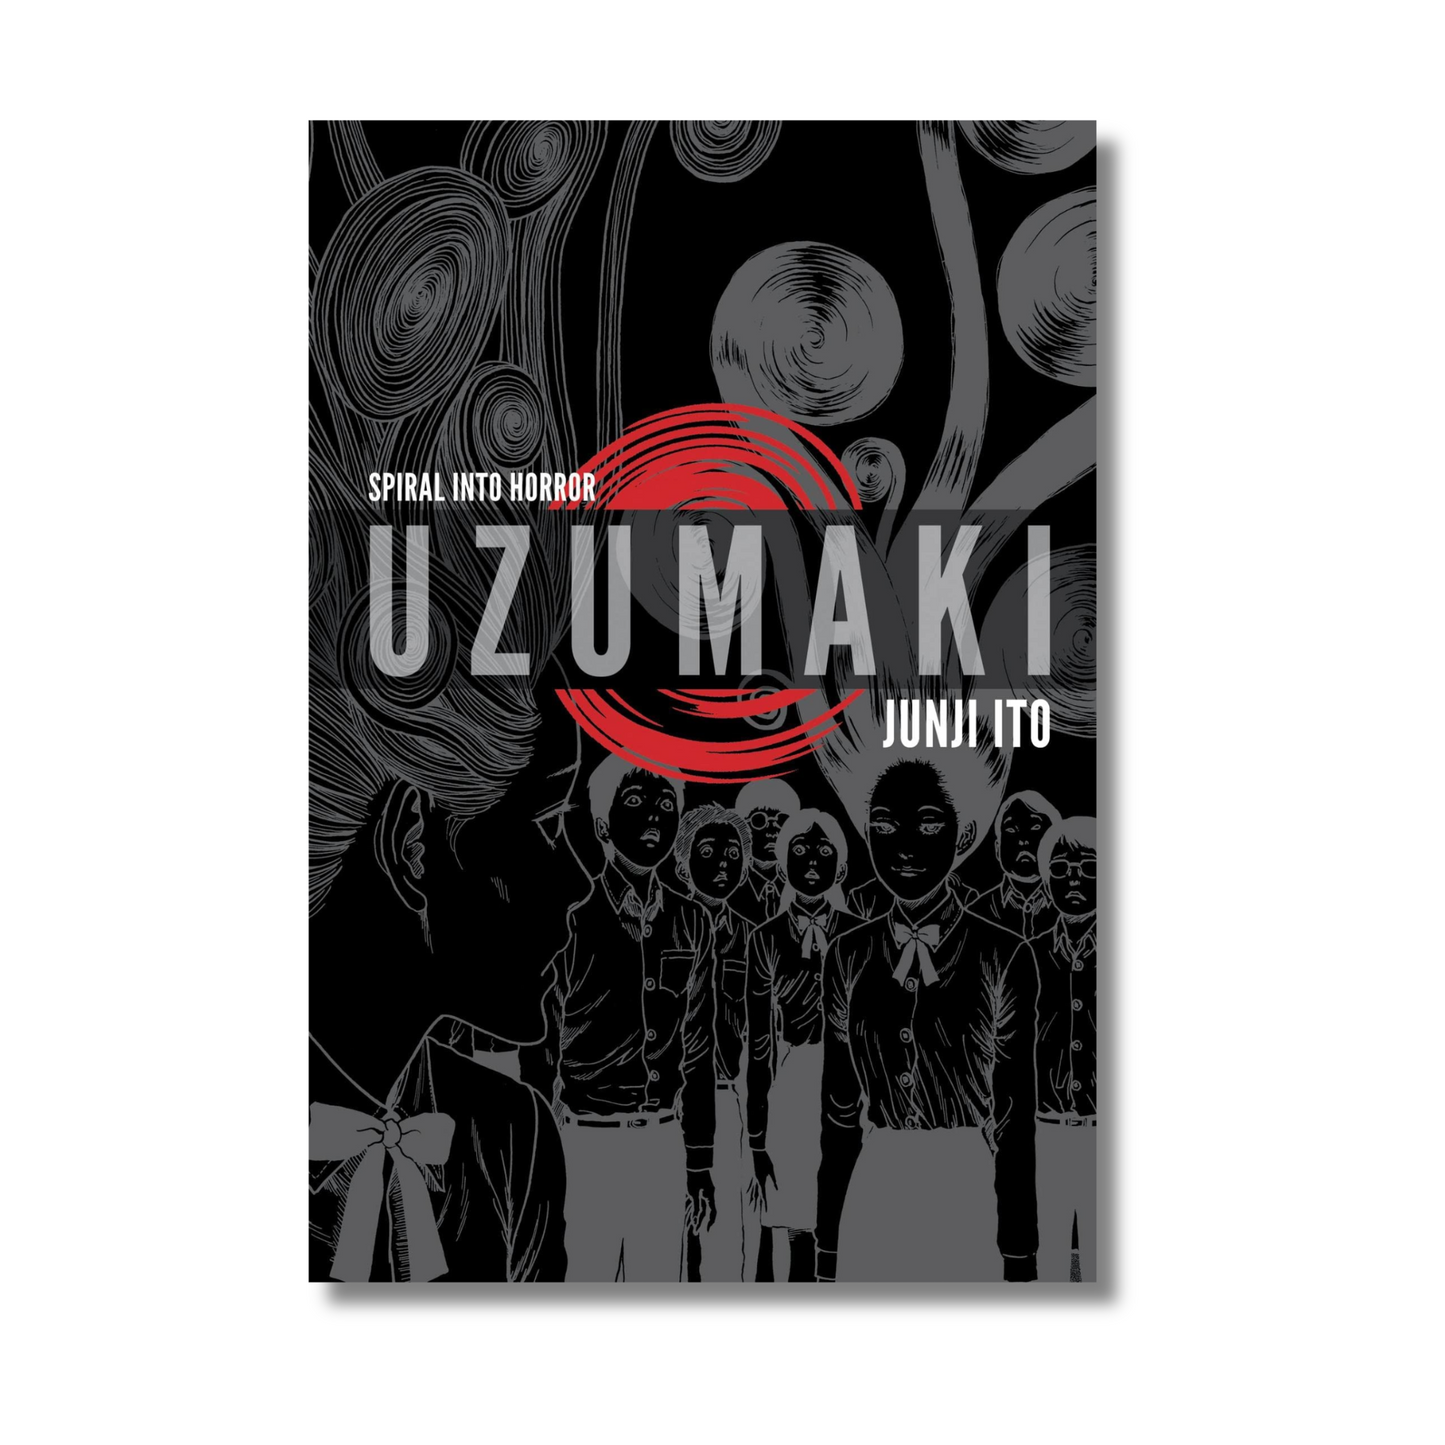 Uzumaki Manga 3 In 1 Edition By Junji Ito (Paperback)